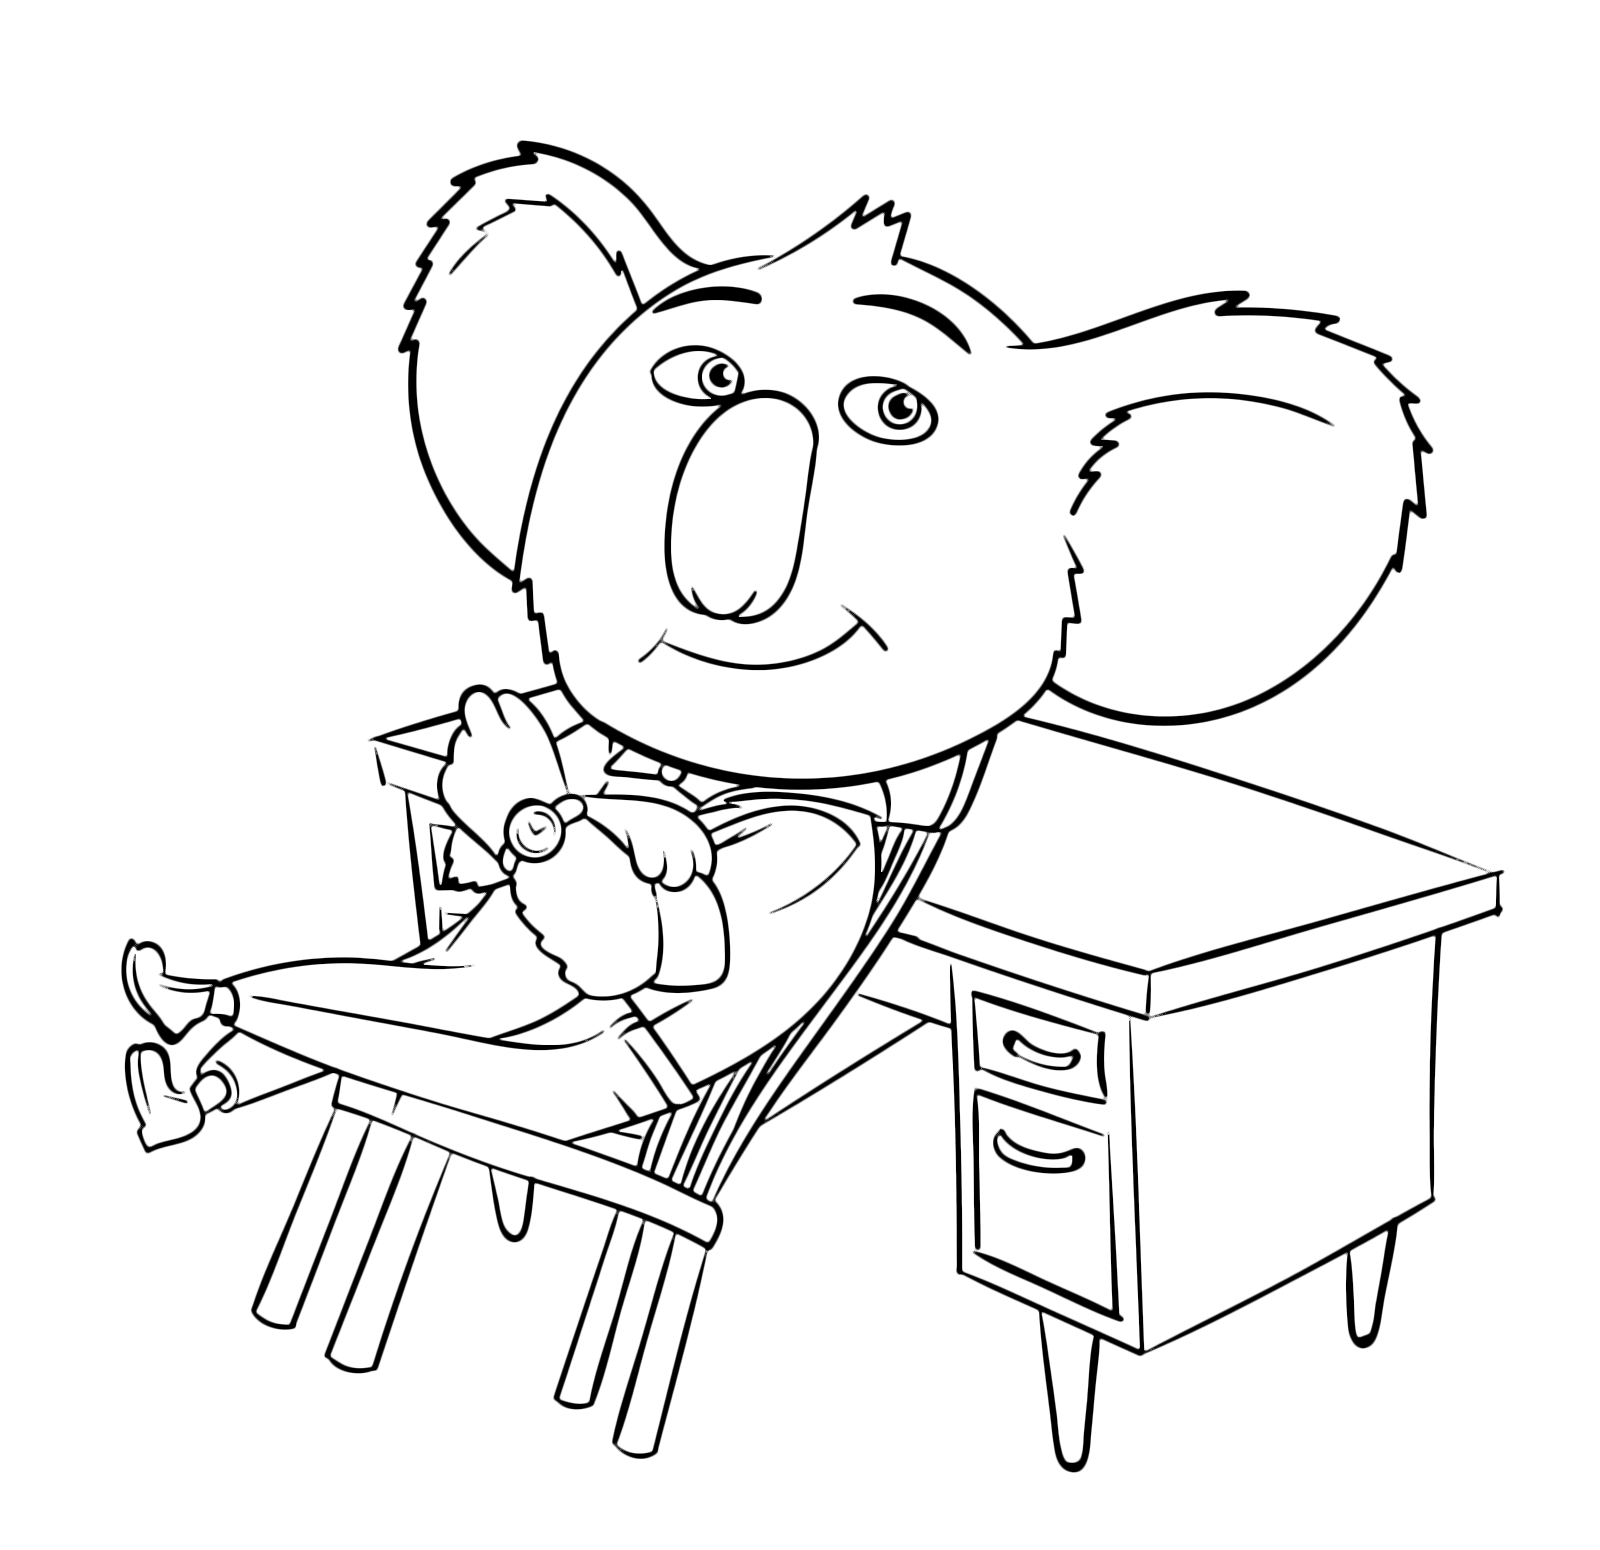 Sing - The koala Buster Moon sat leaning against the desk